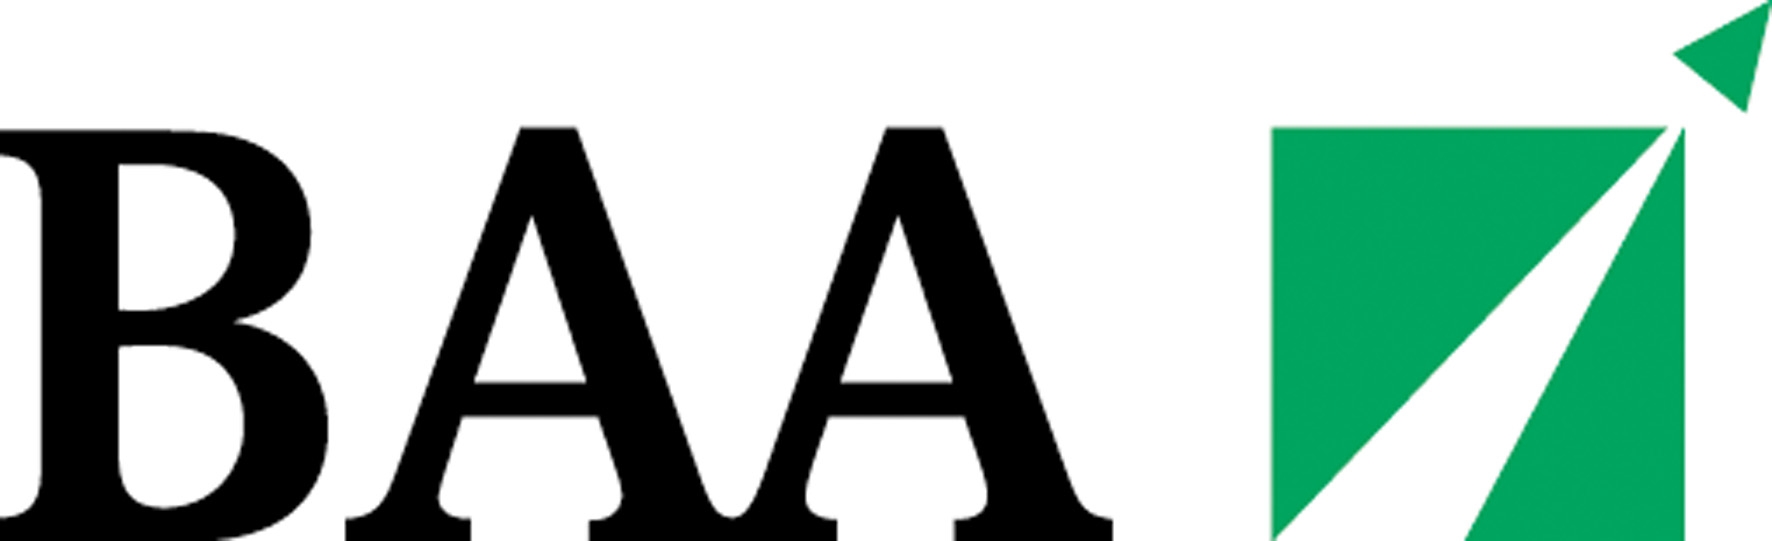 Ubiquitous Taxi Advertising client BAA  logo